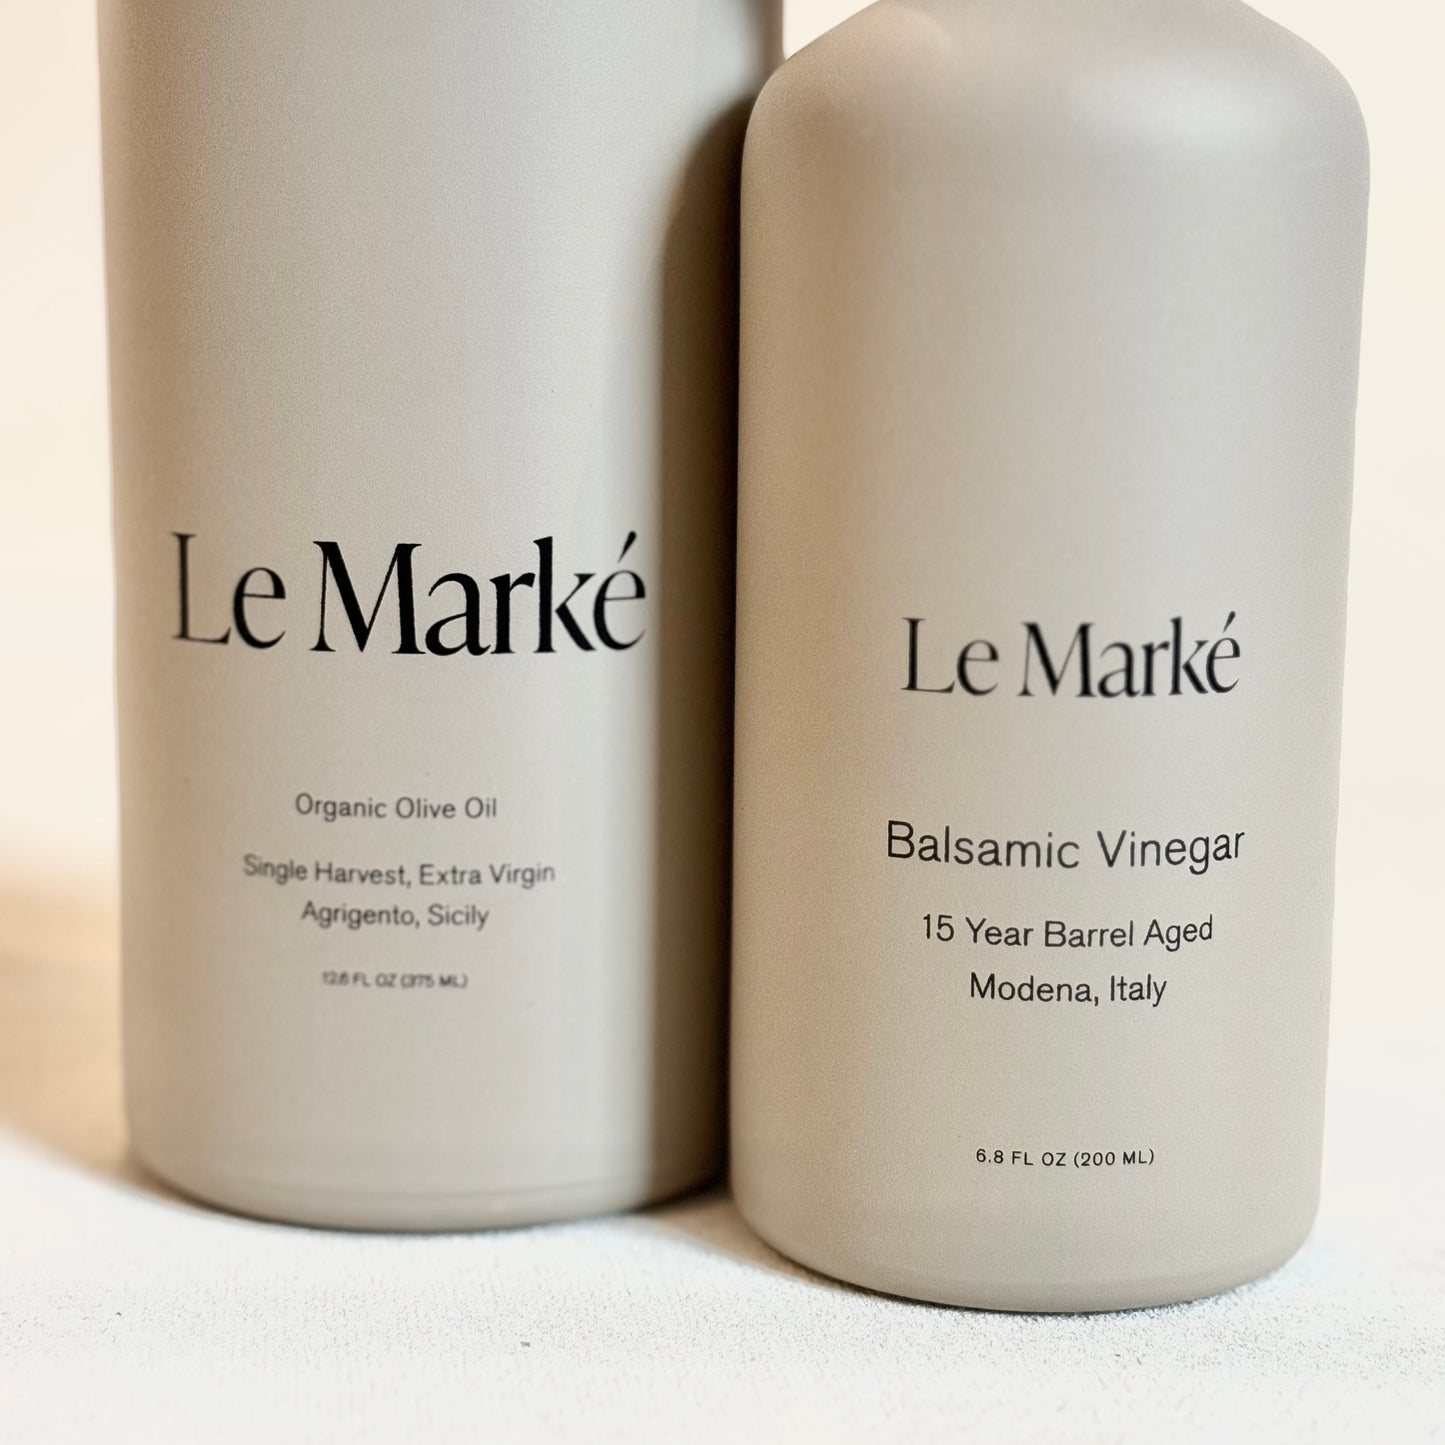 Le Marké Duo: Organic Olive Oil + Balsamic Vinegar